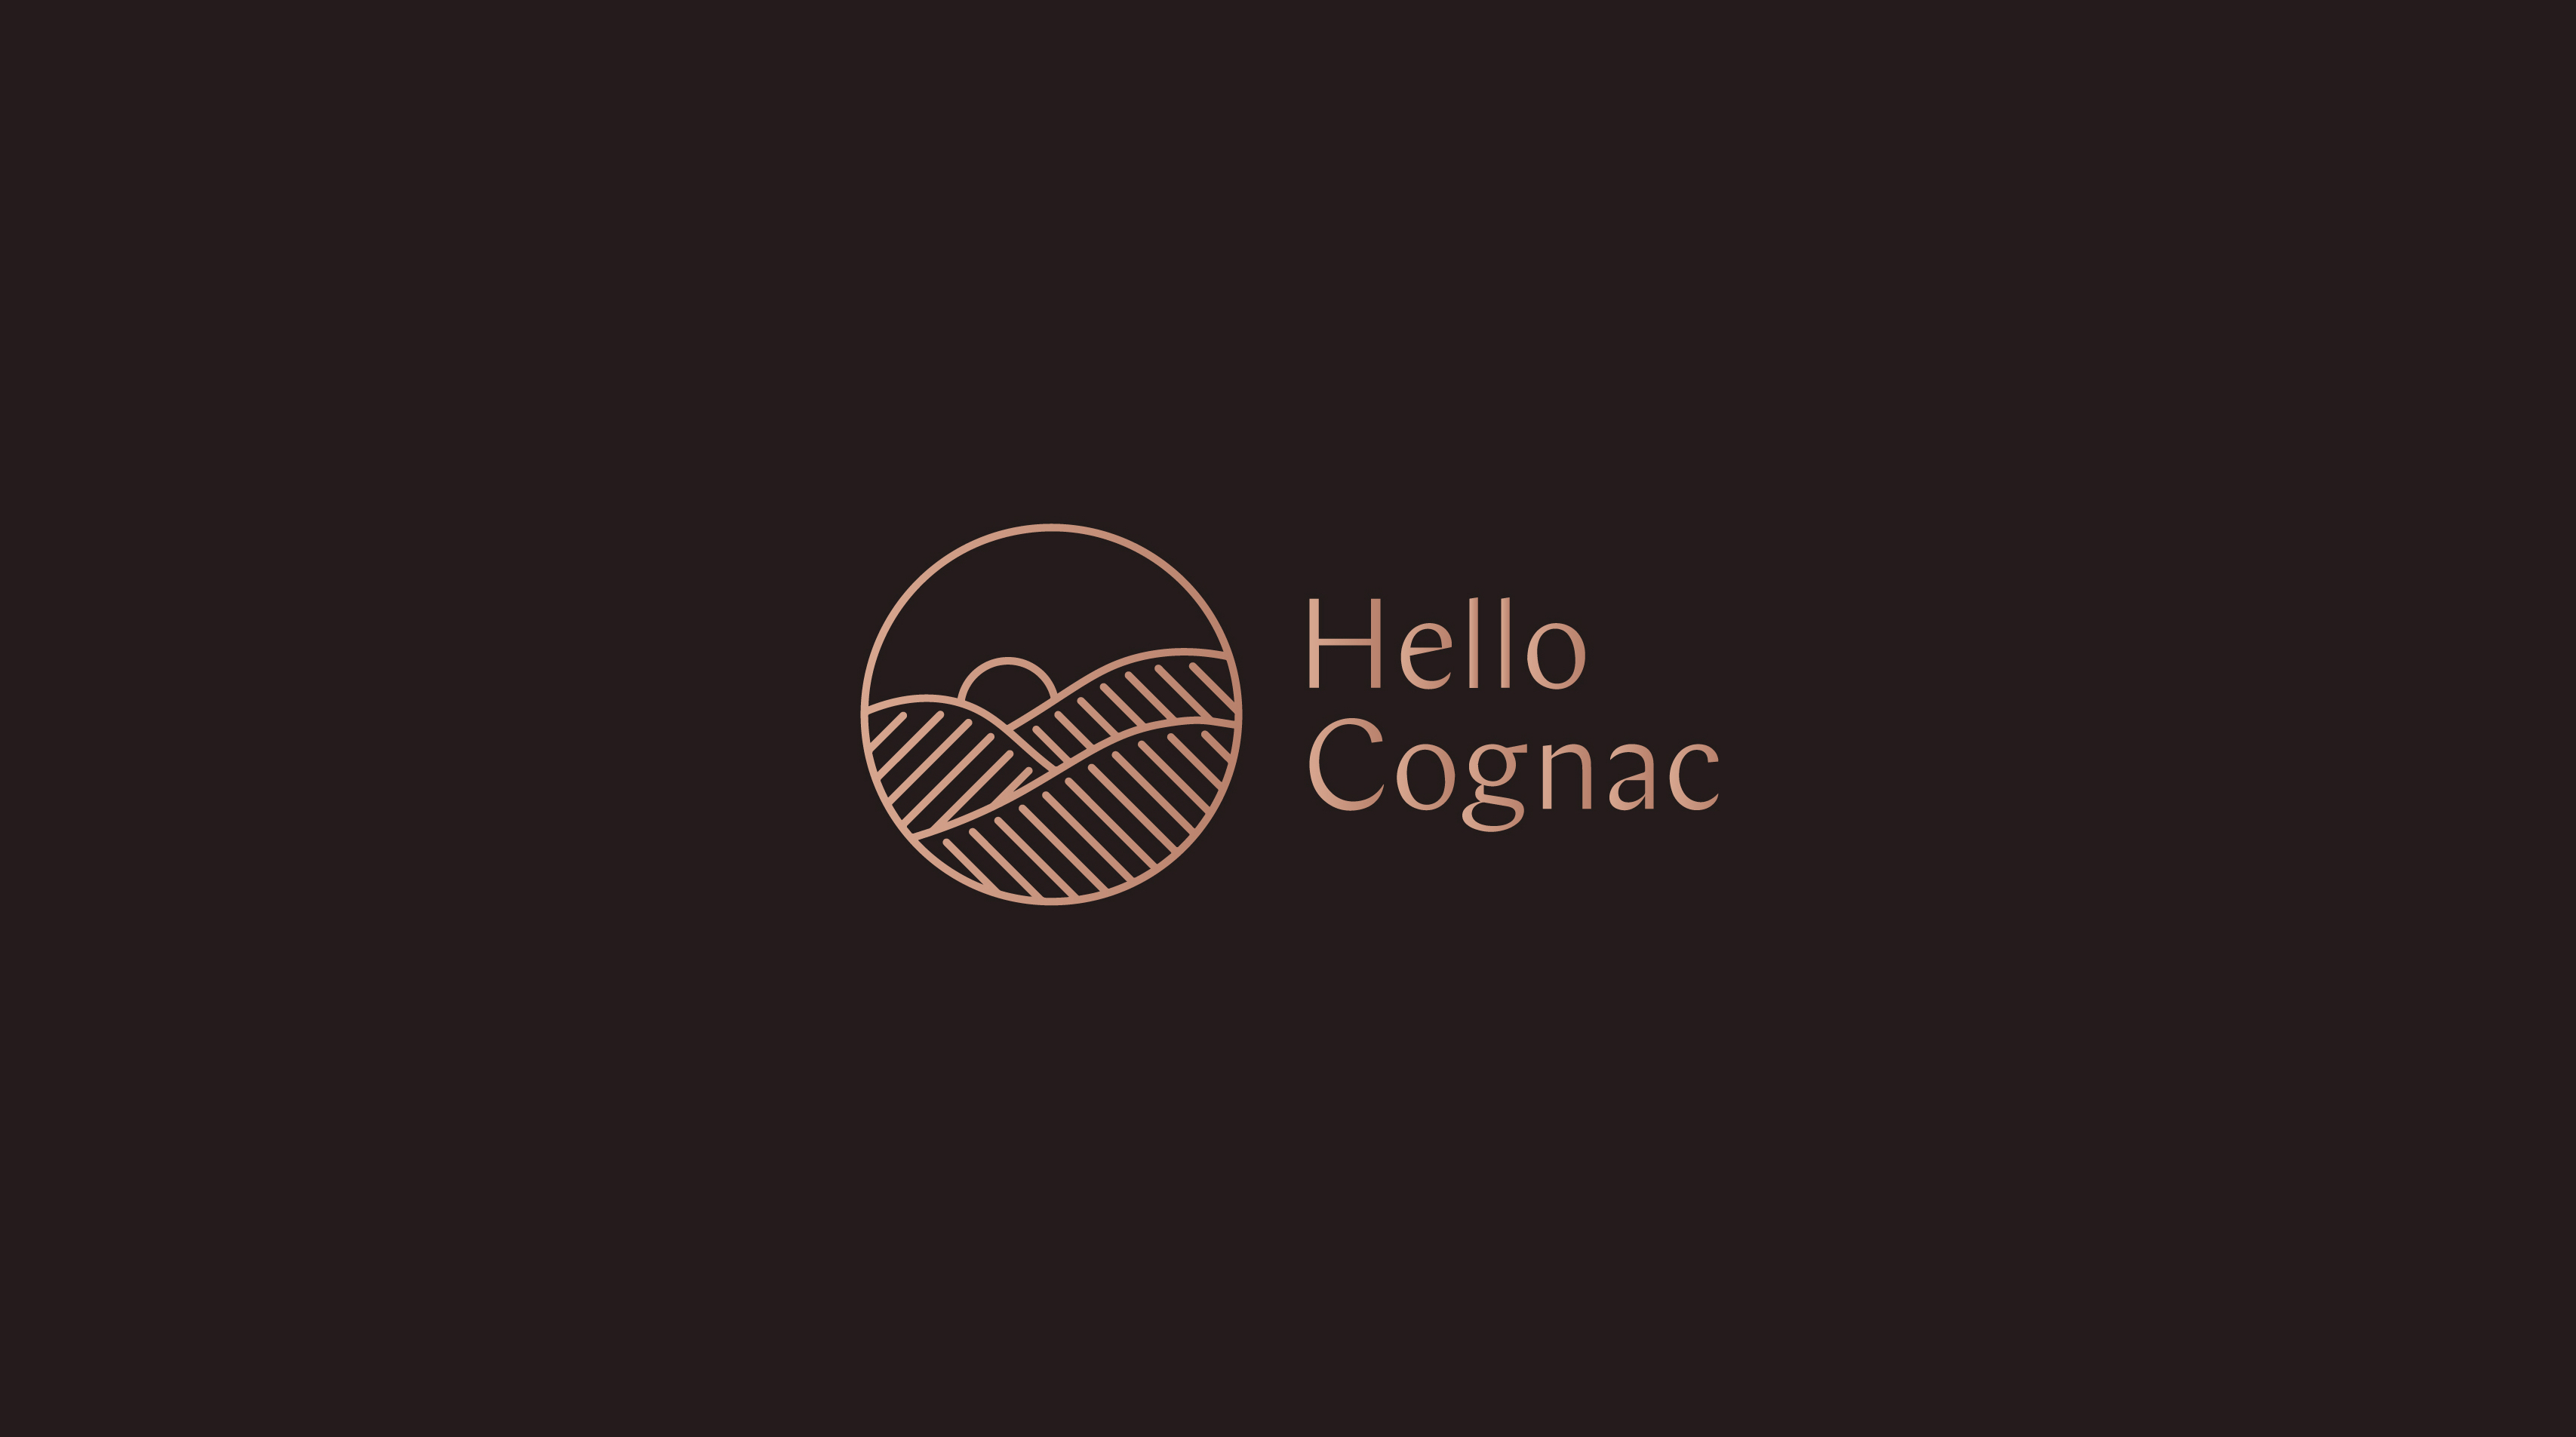 Hello Cognac logo